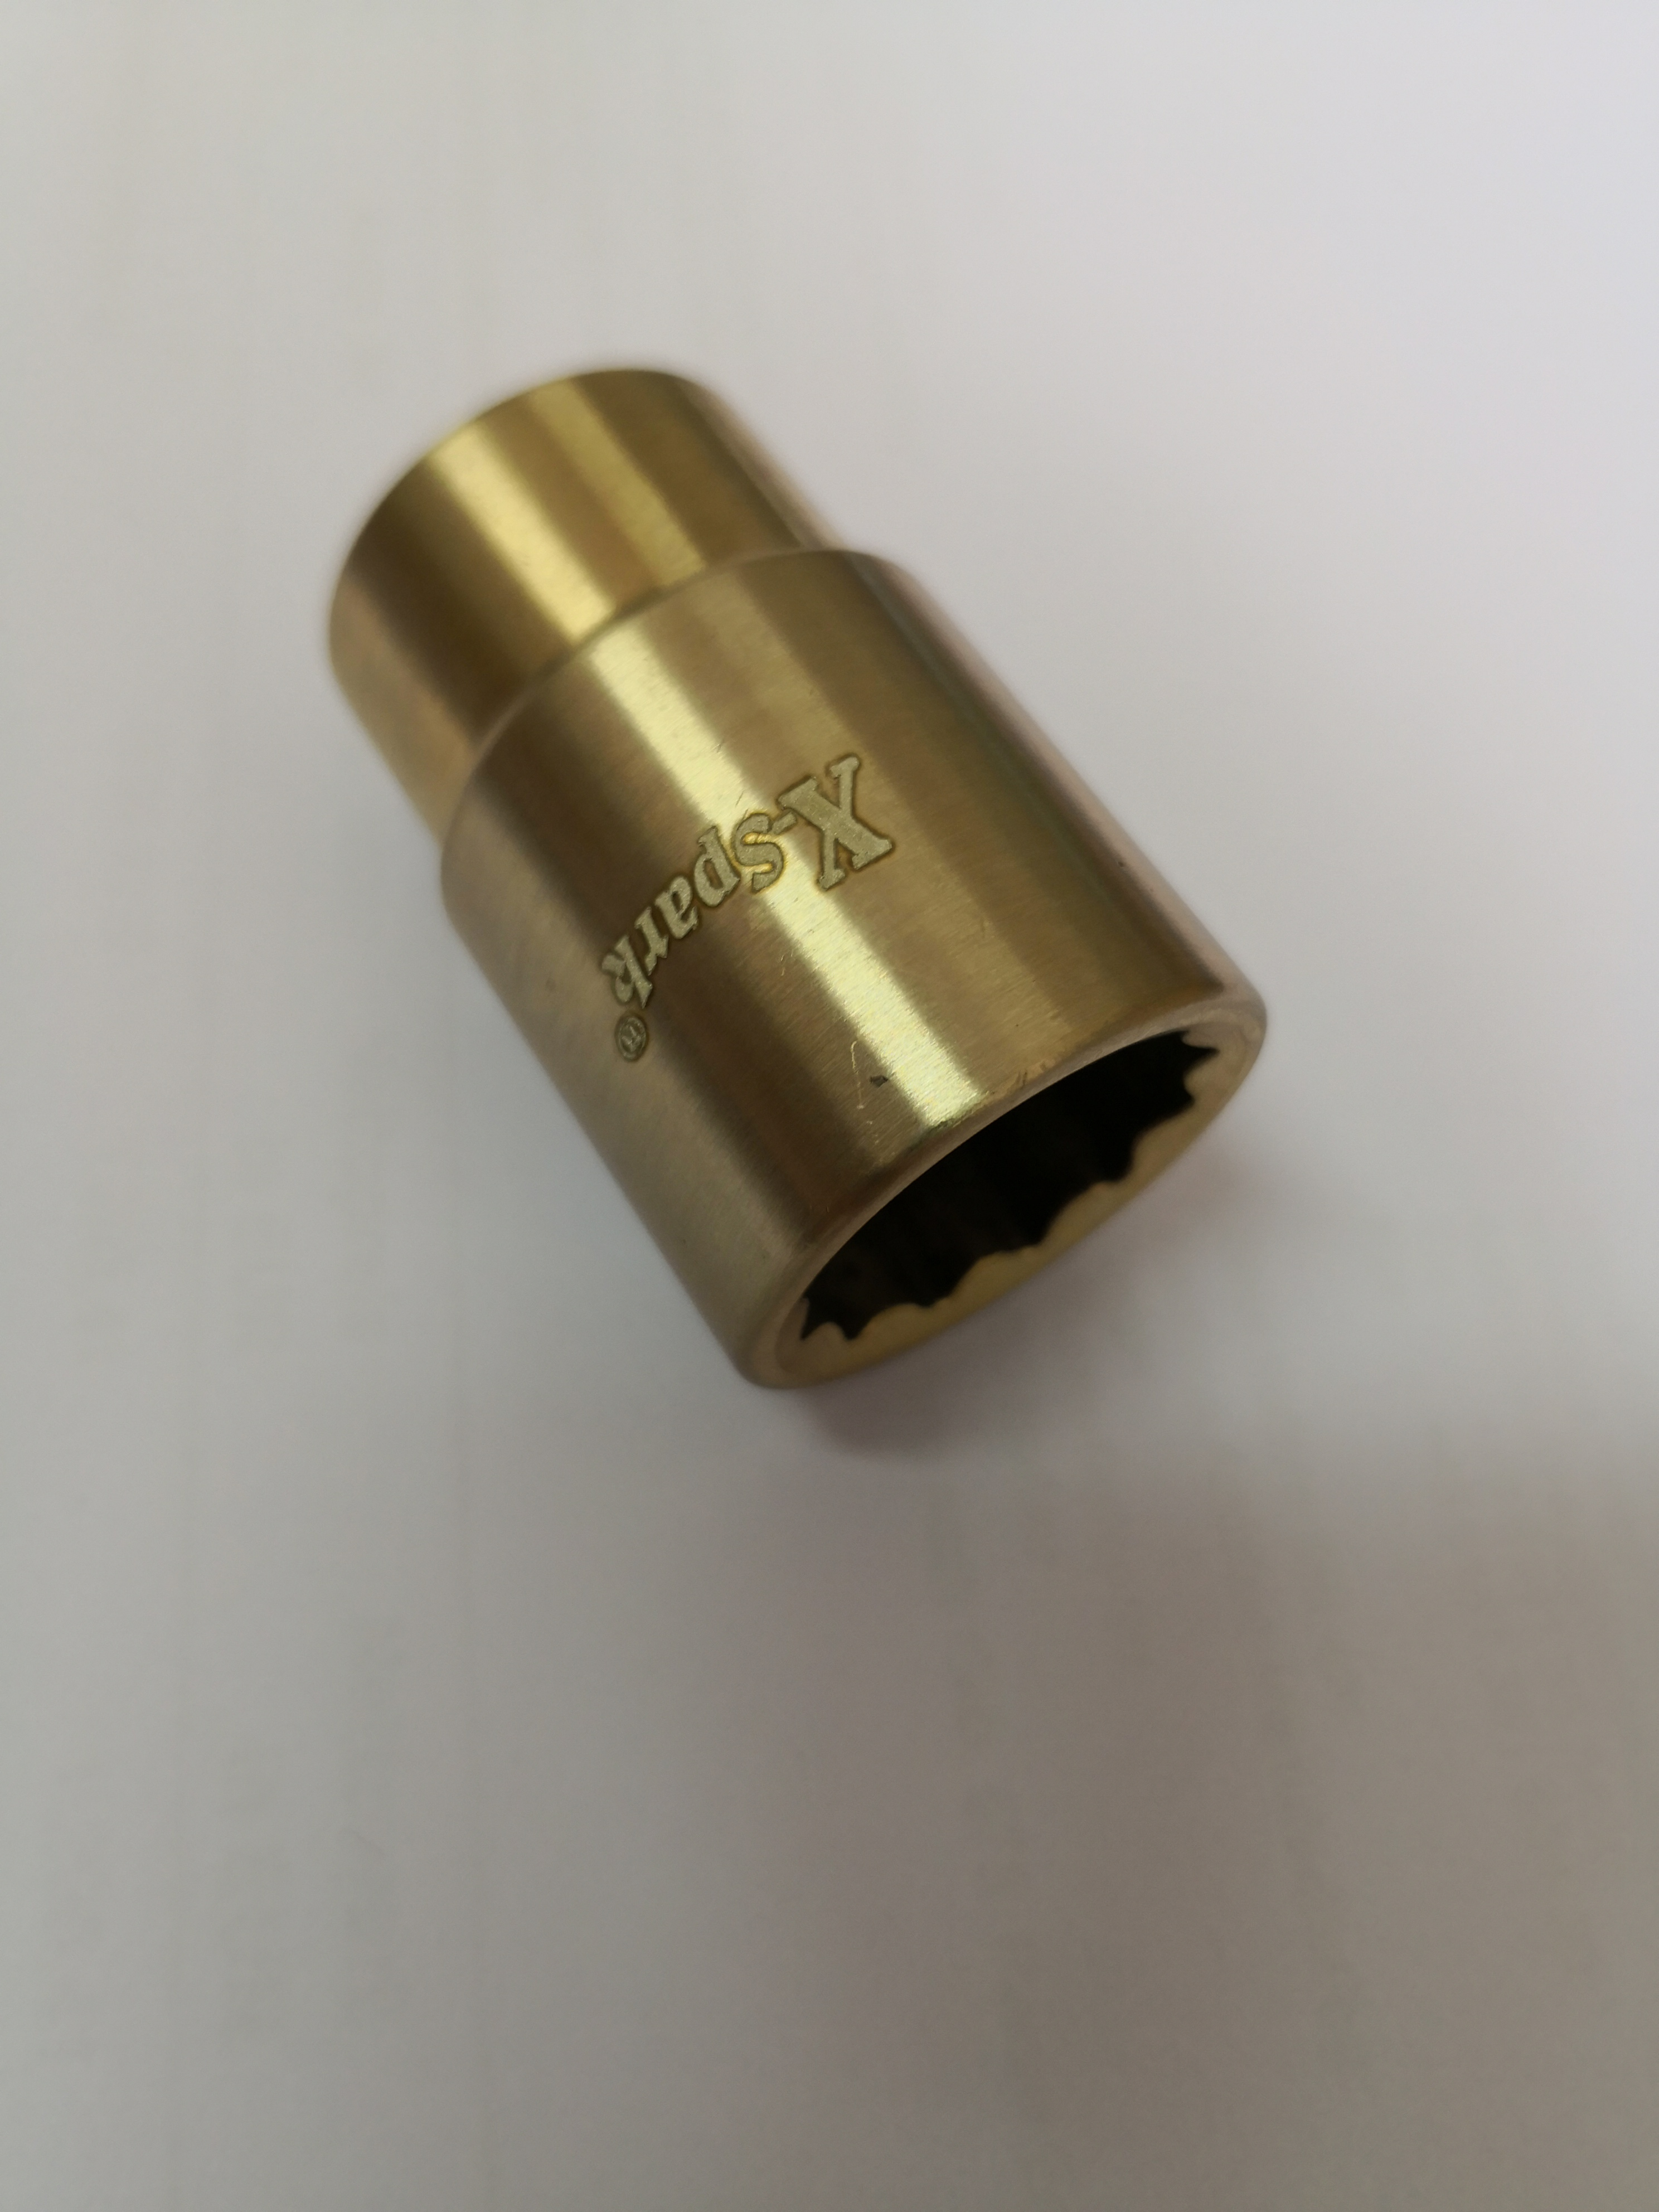 Socket 1/4 7 mm- non-sparking / low-sparking